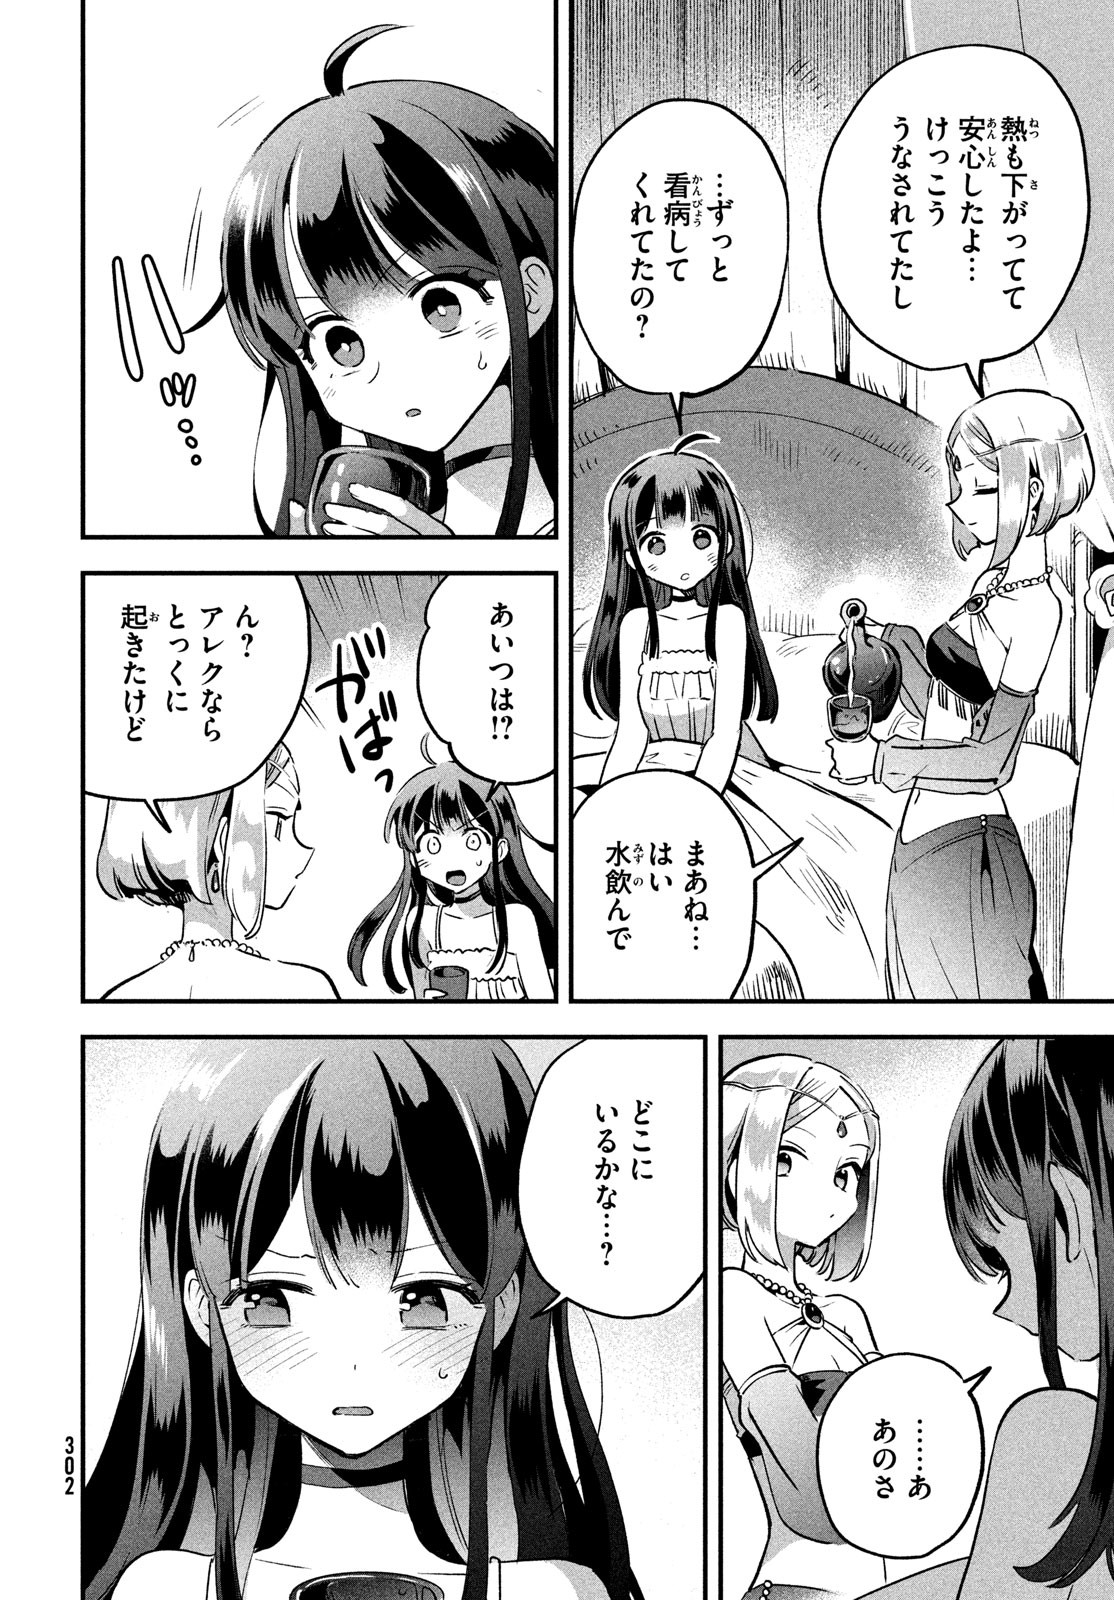 7-nin no Nemuri Hime - Chapter 25 - Page 2